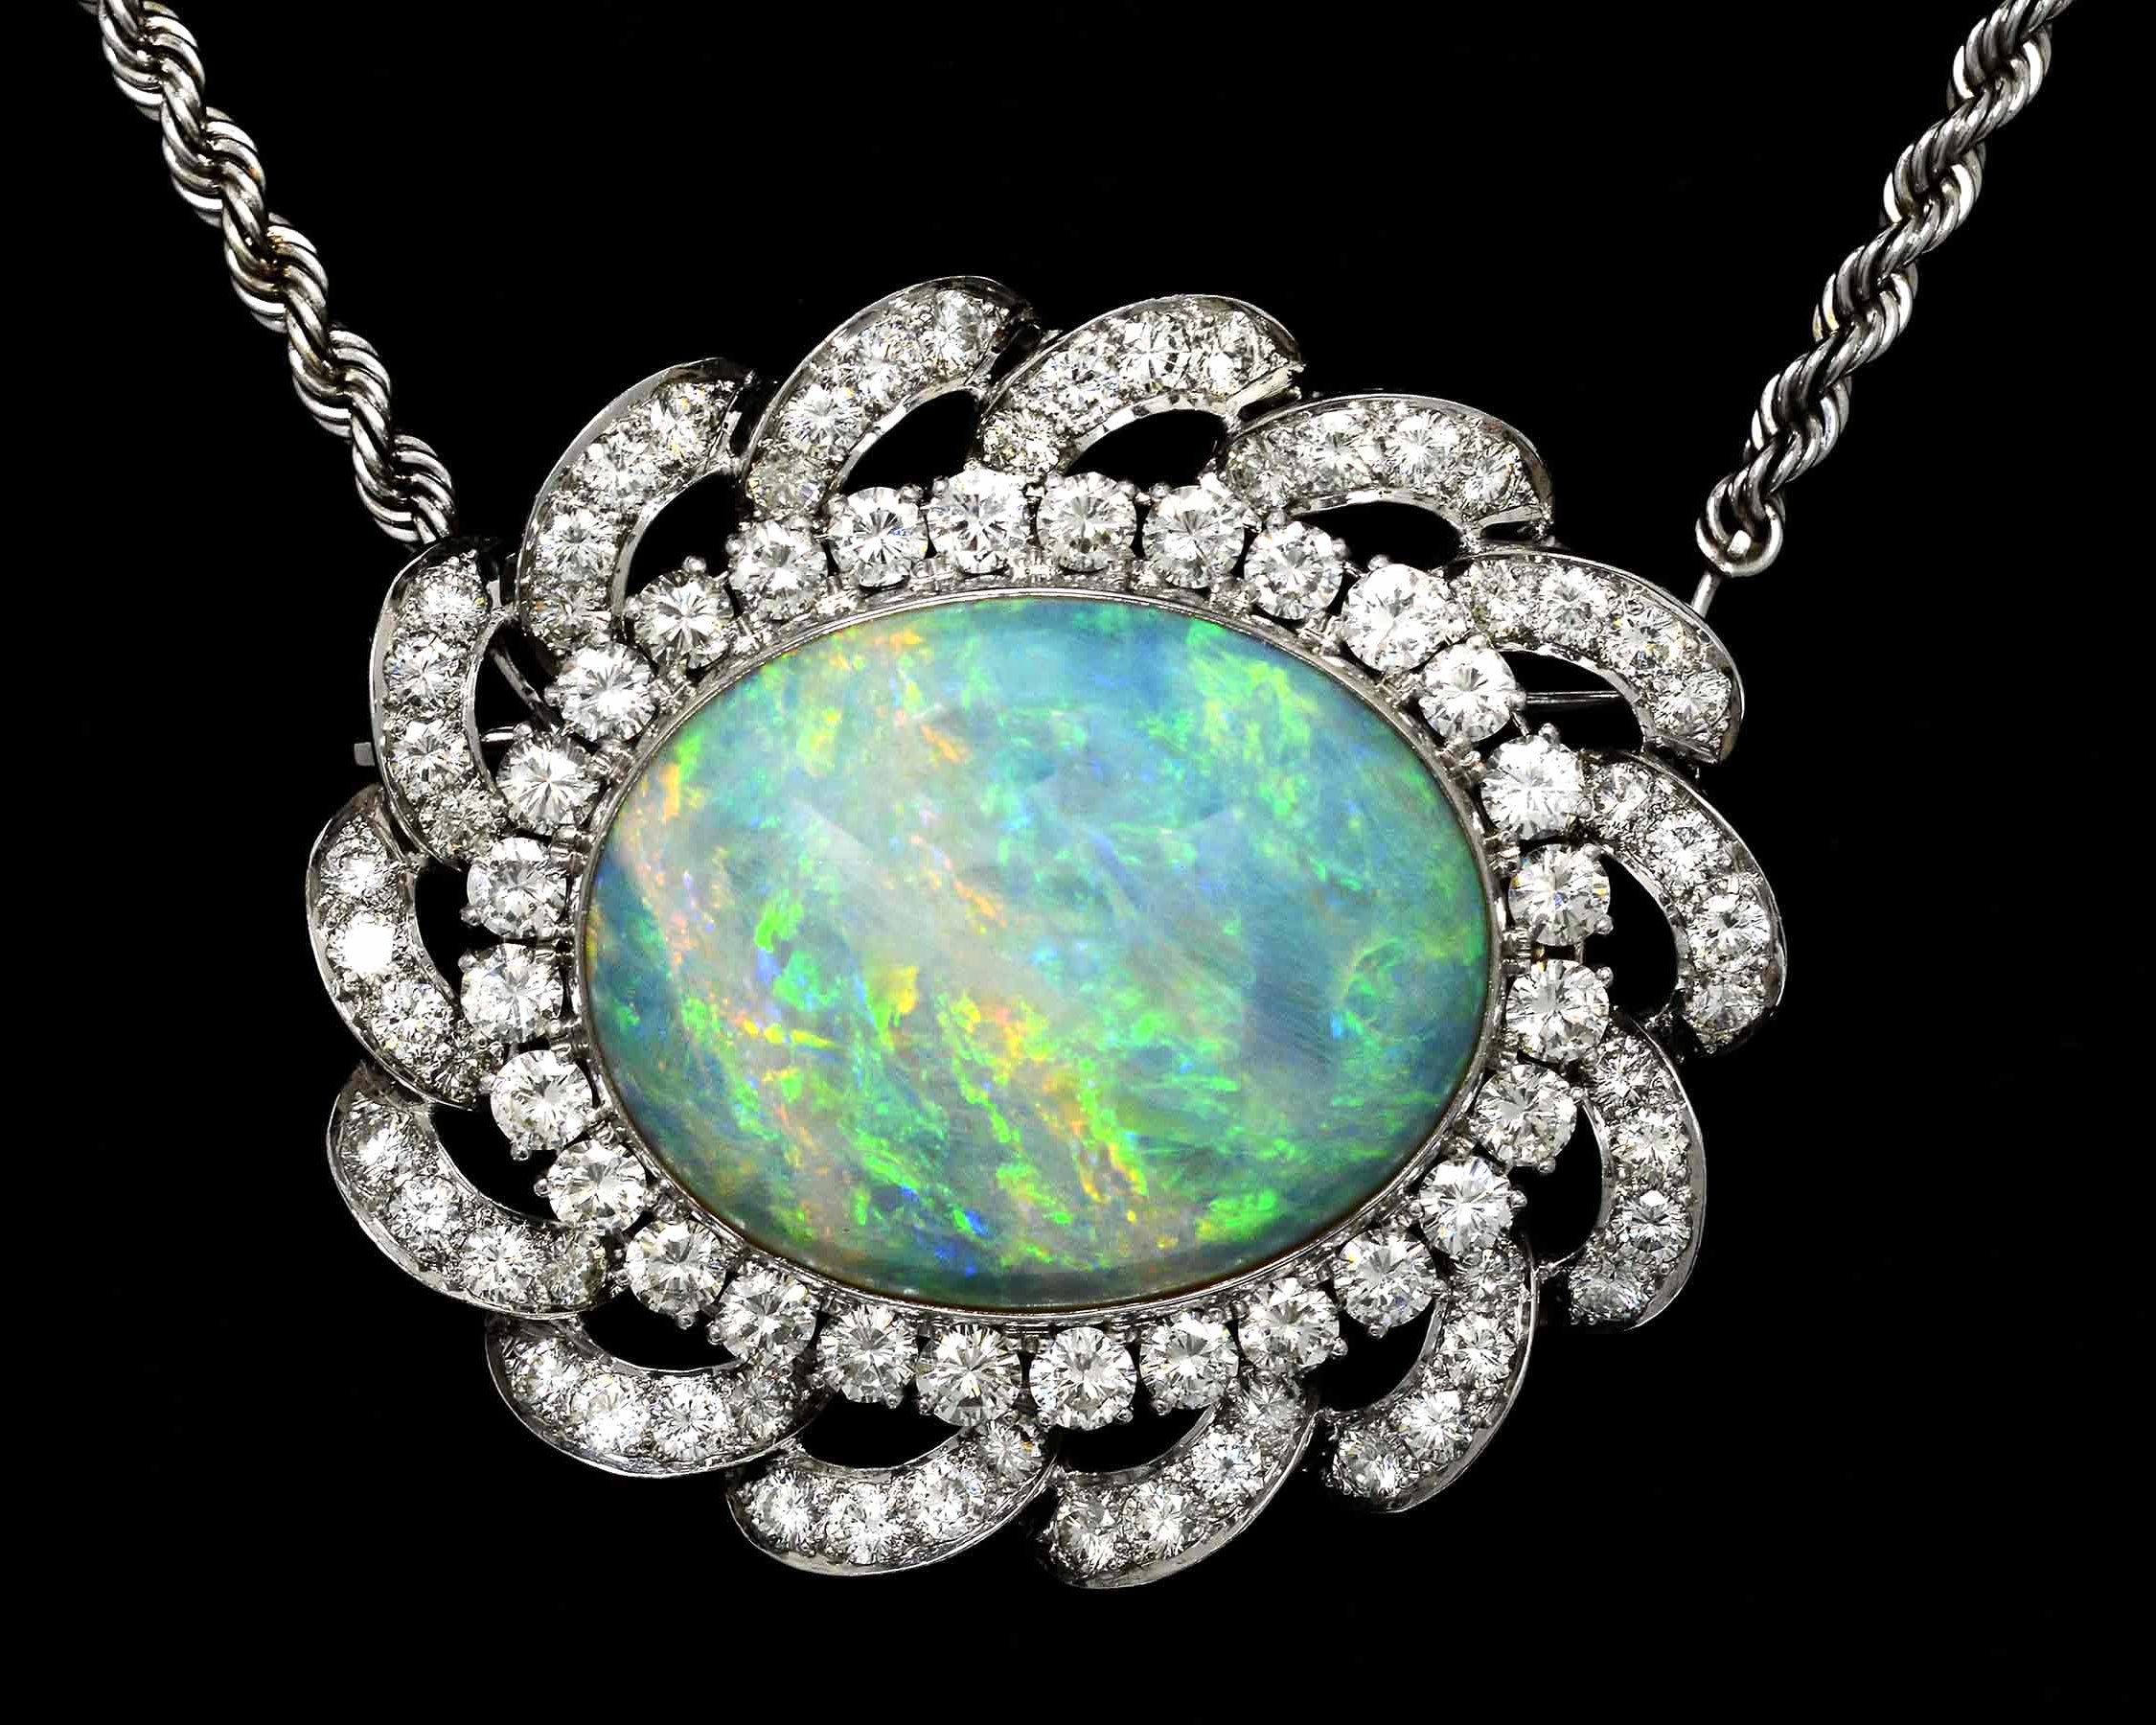 A 30 carat oval opal, white gold diamond halo pendant necklace.